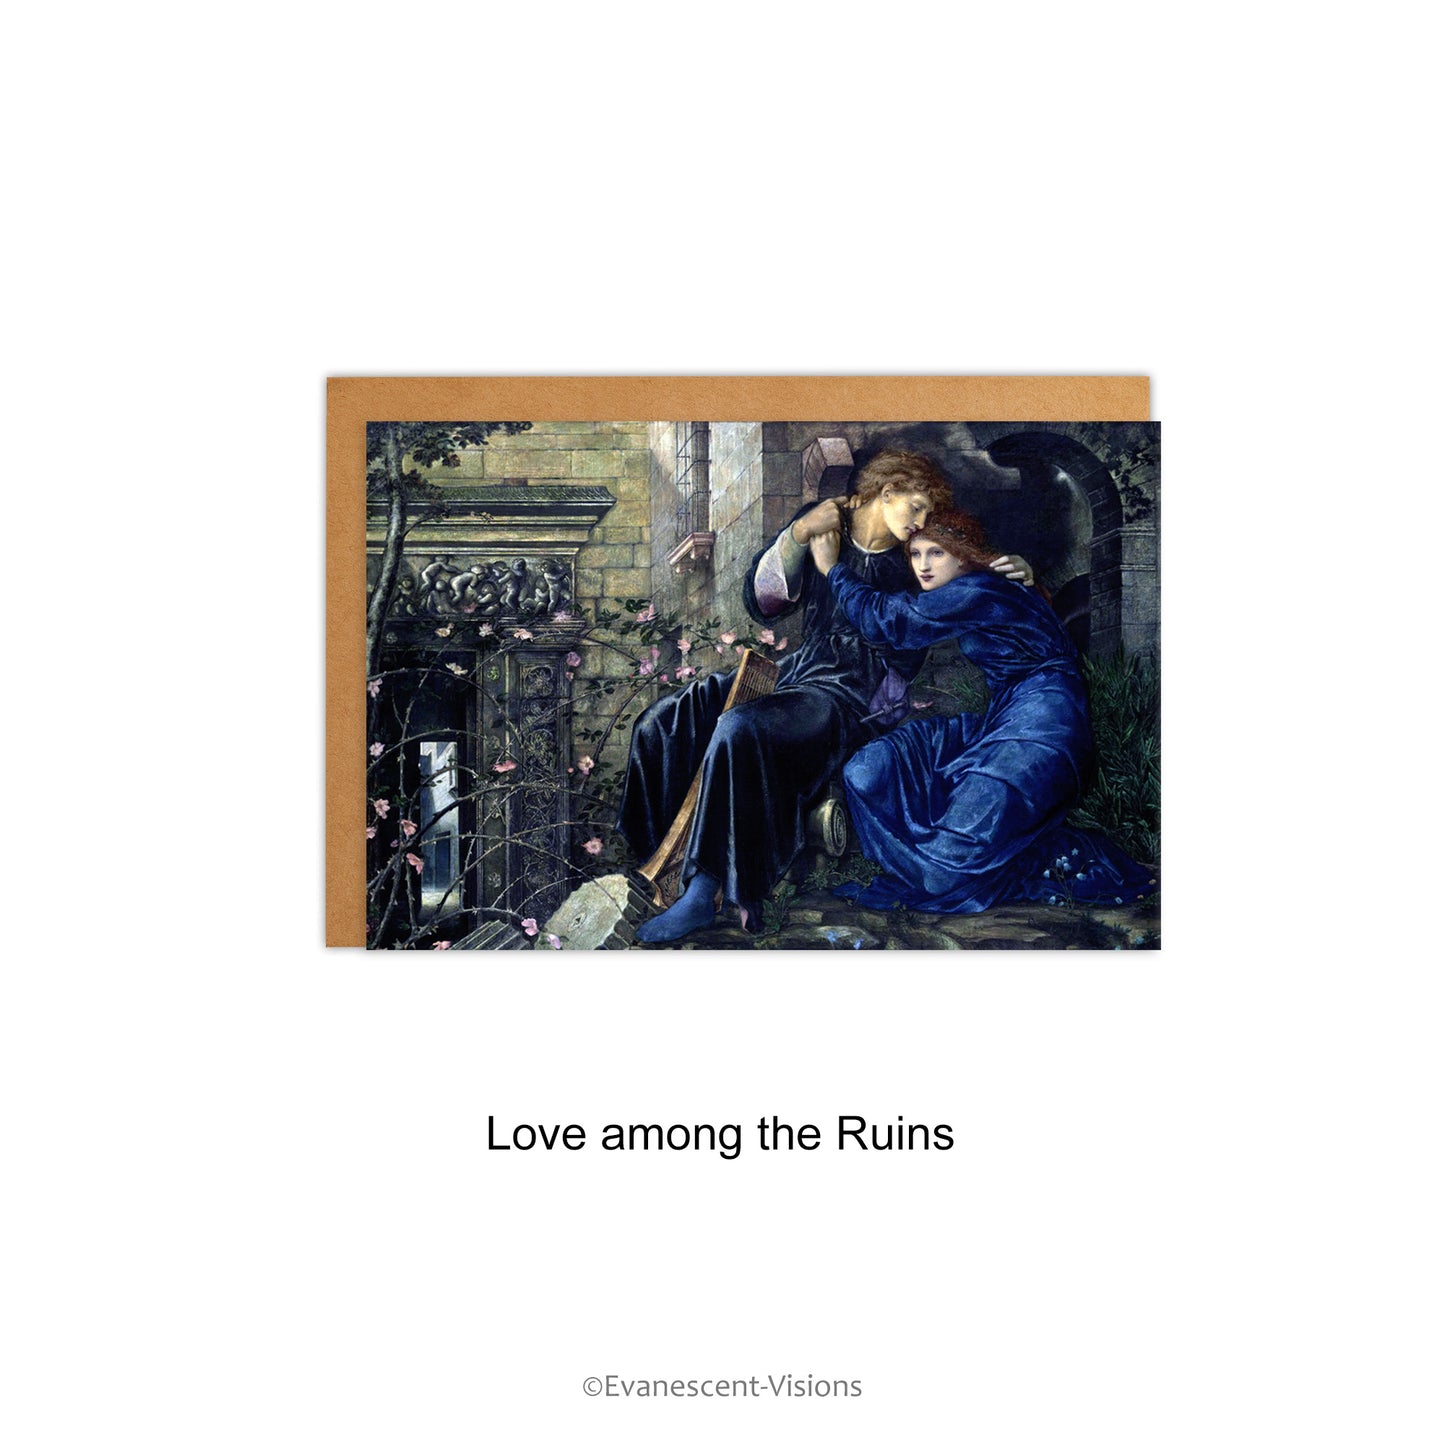 Design choice, 'Love among the Ruins.'